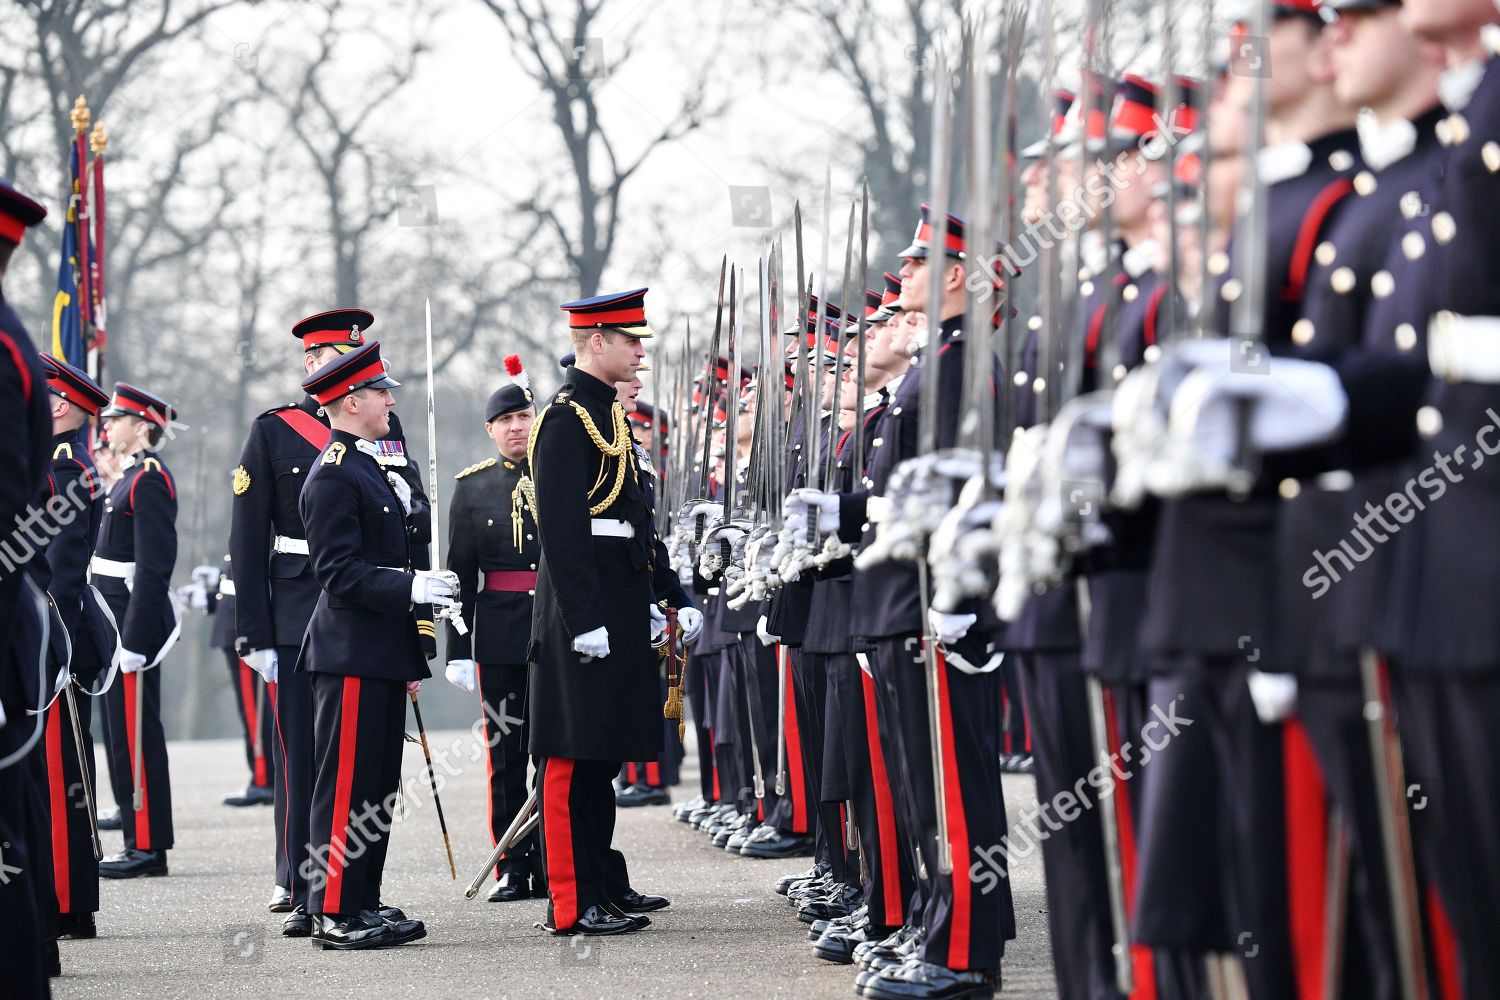 sovereigns-parade-at-the-royal-military-academy-sandhurst-berkshire-uk-shutterstock-editorial-10033849al.jpg